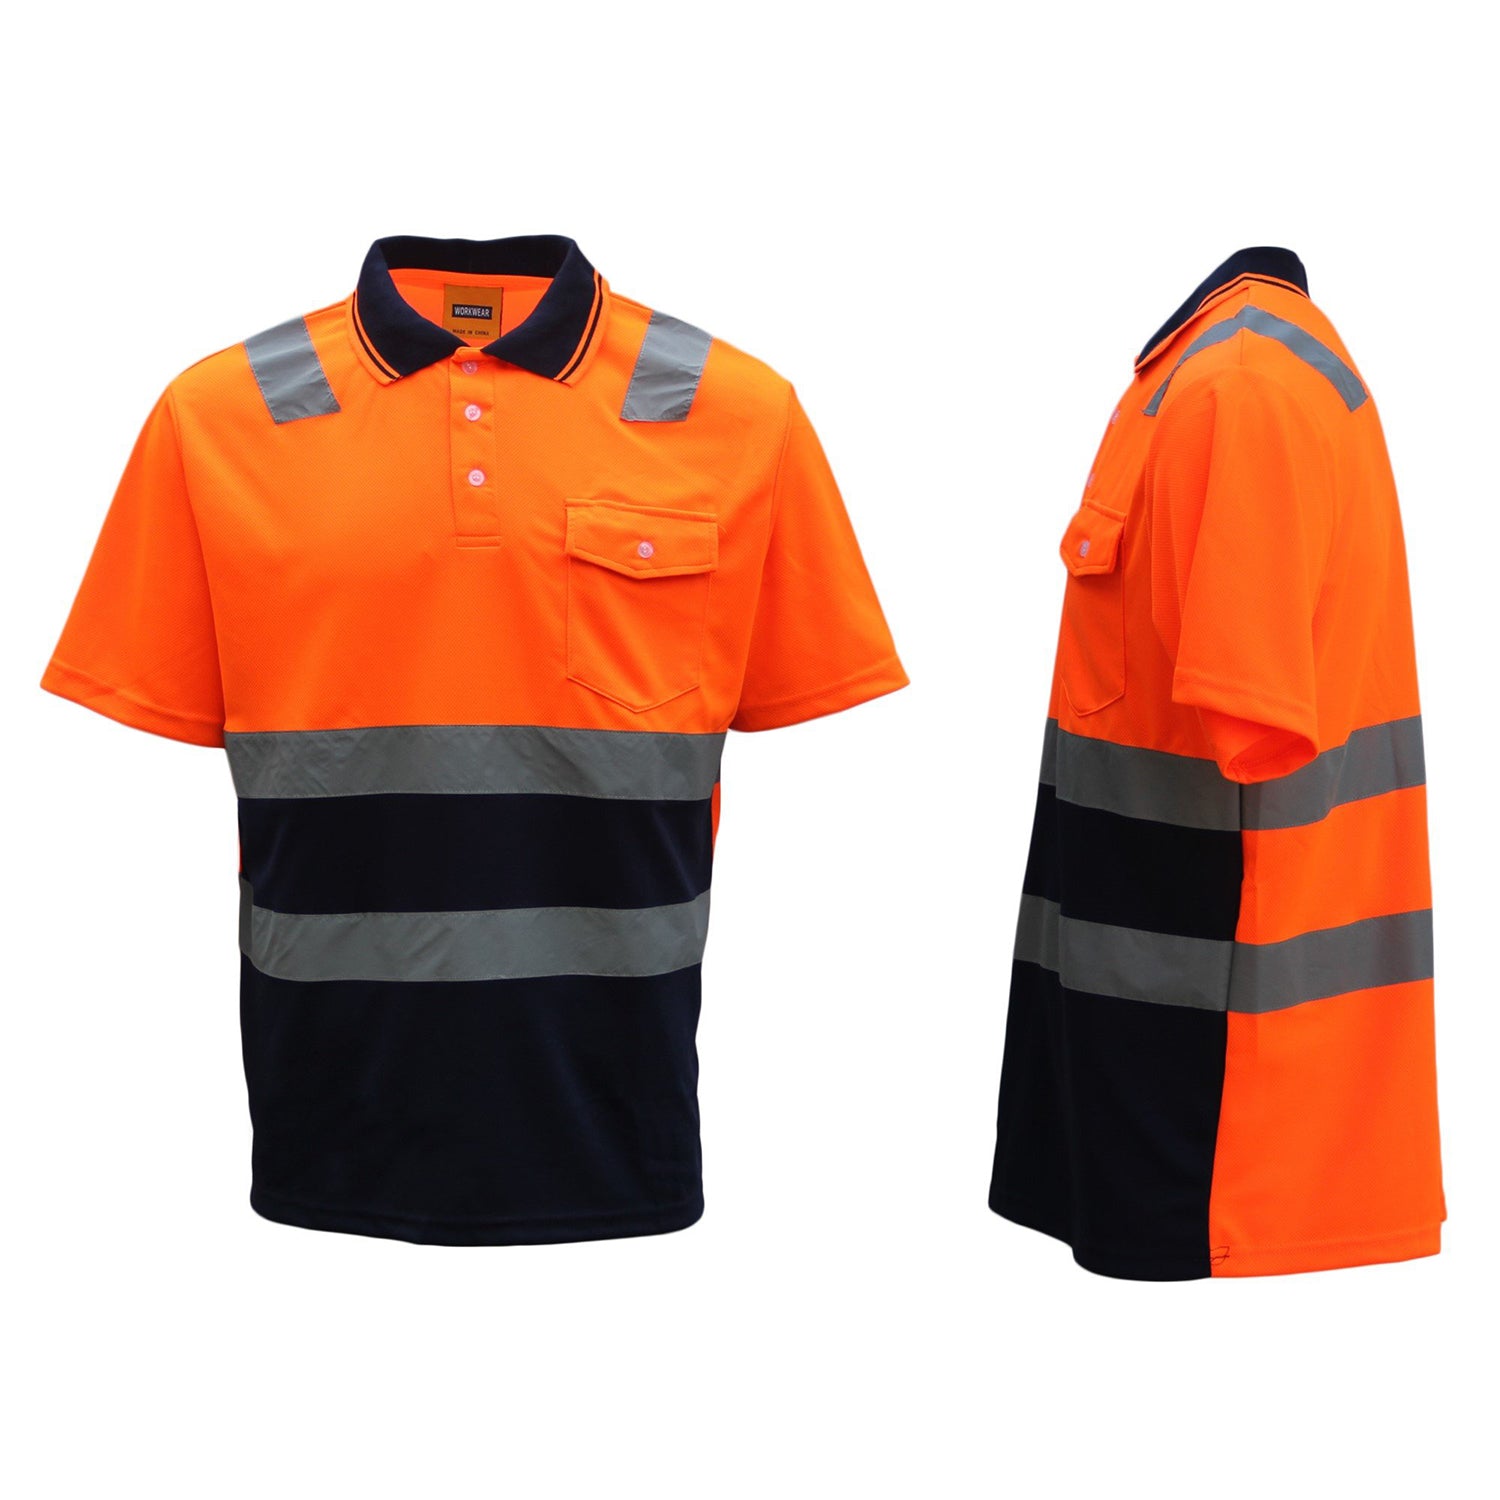 HI VIS Short Sleeve Workwear Shirt w Reflective Tape Cool Dry Safety Polo 2 Tone, Fluoro Orange / Navy, 3XL